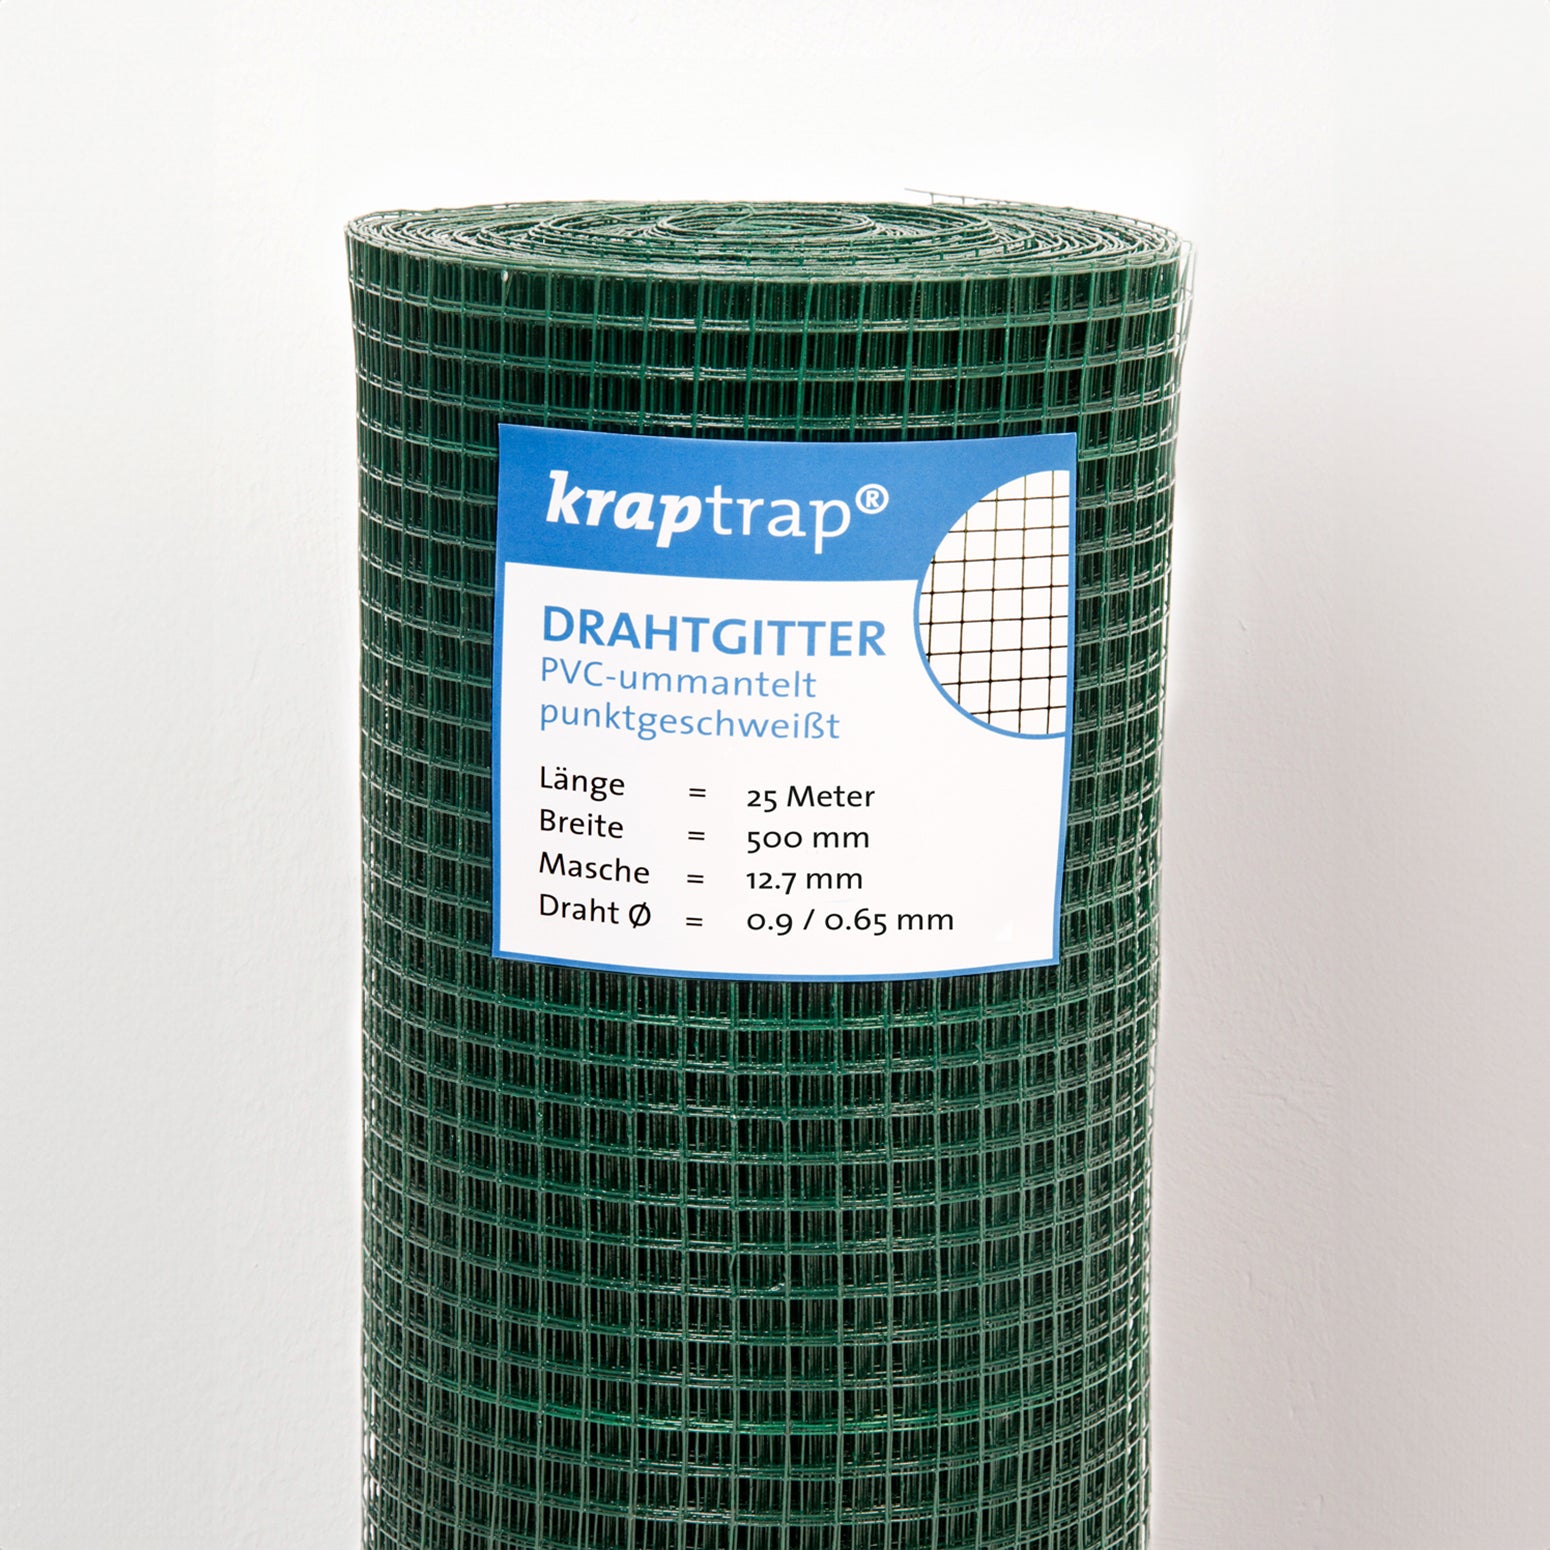 Kraptrap® Volierendraht Drahtgitter grün 12,7 mm Masche, 50 cm breit, 25 m lang